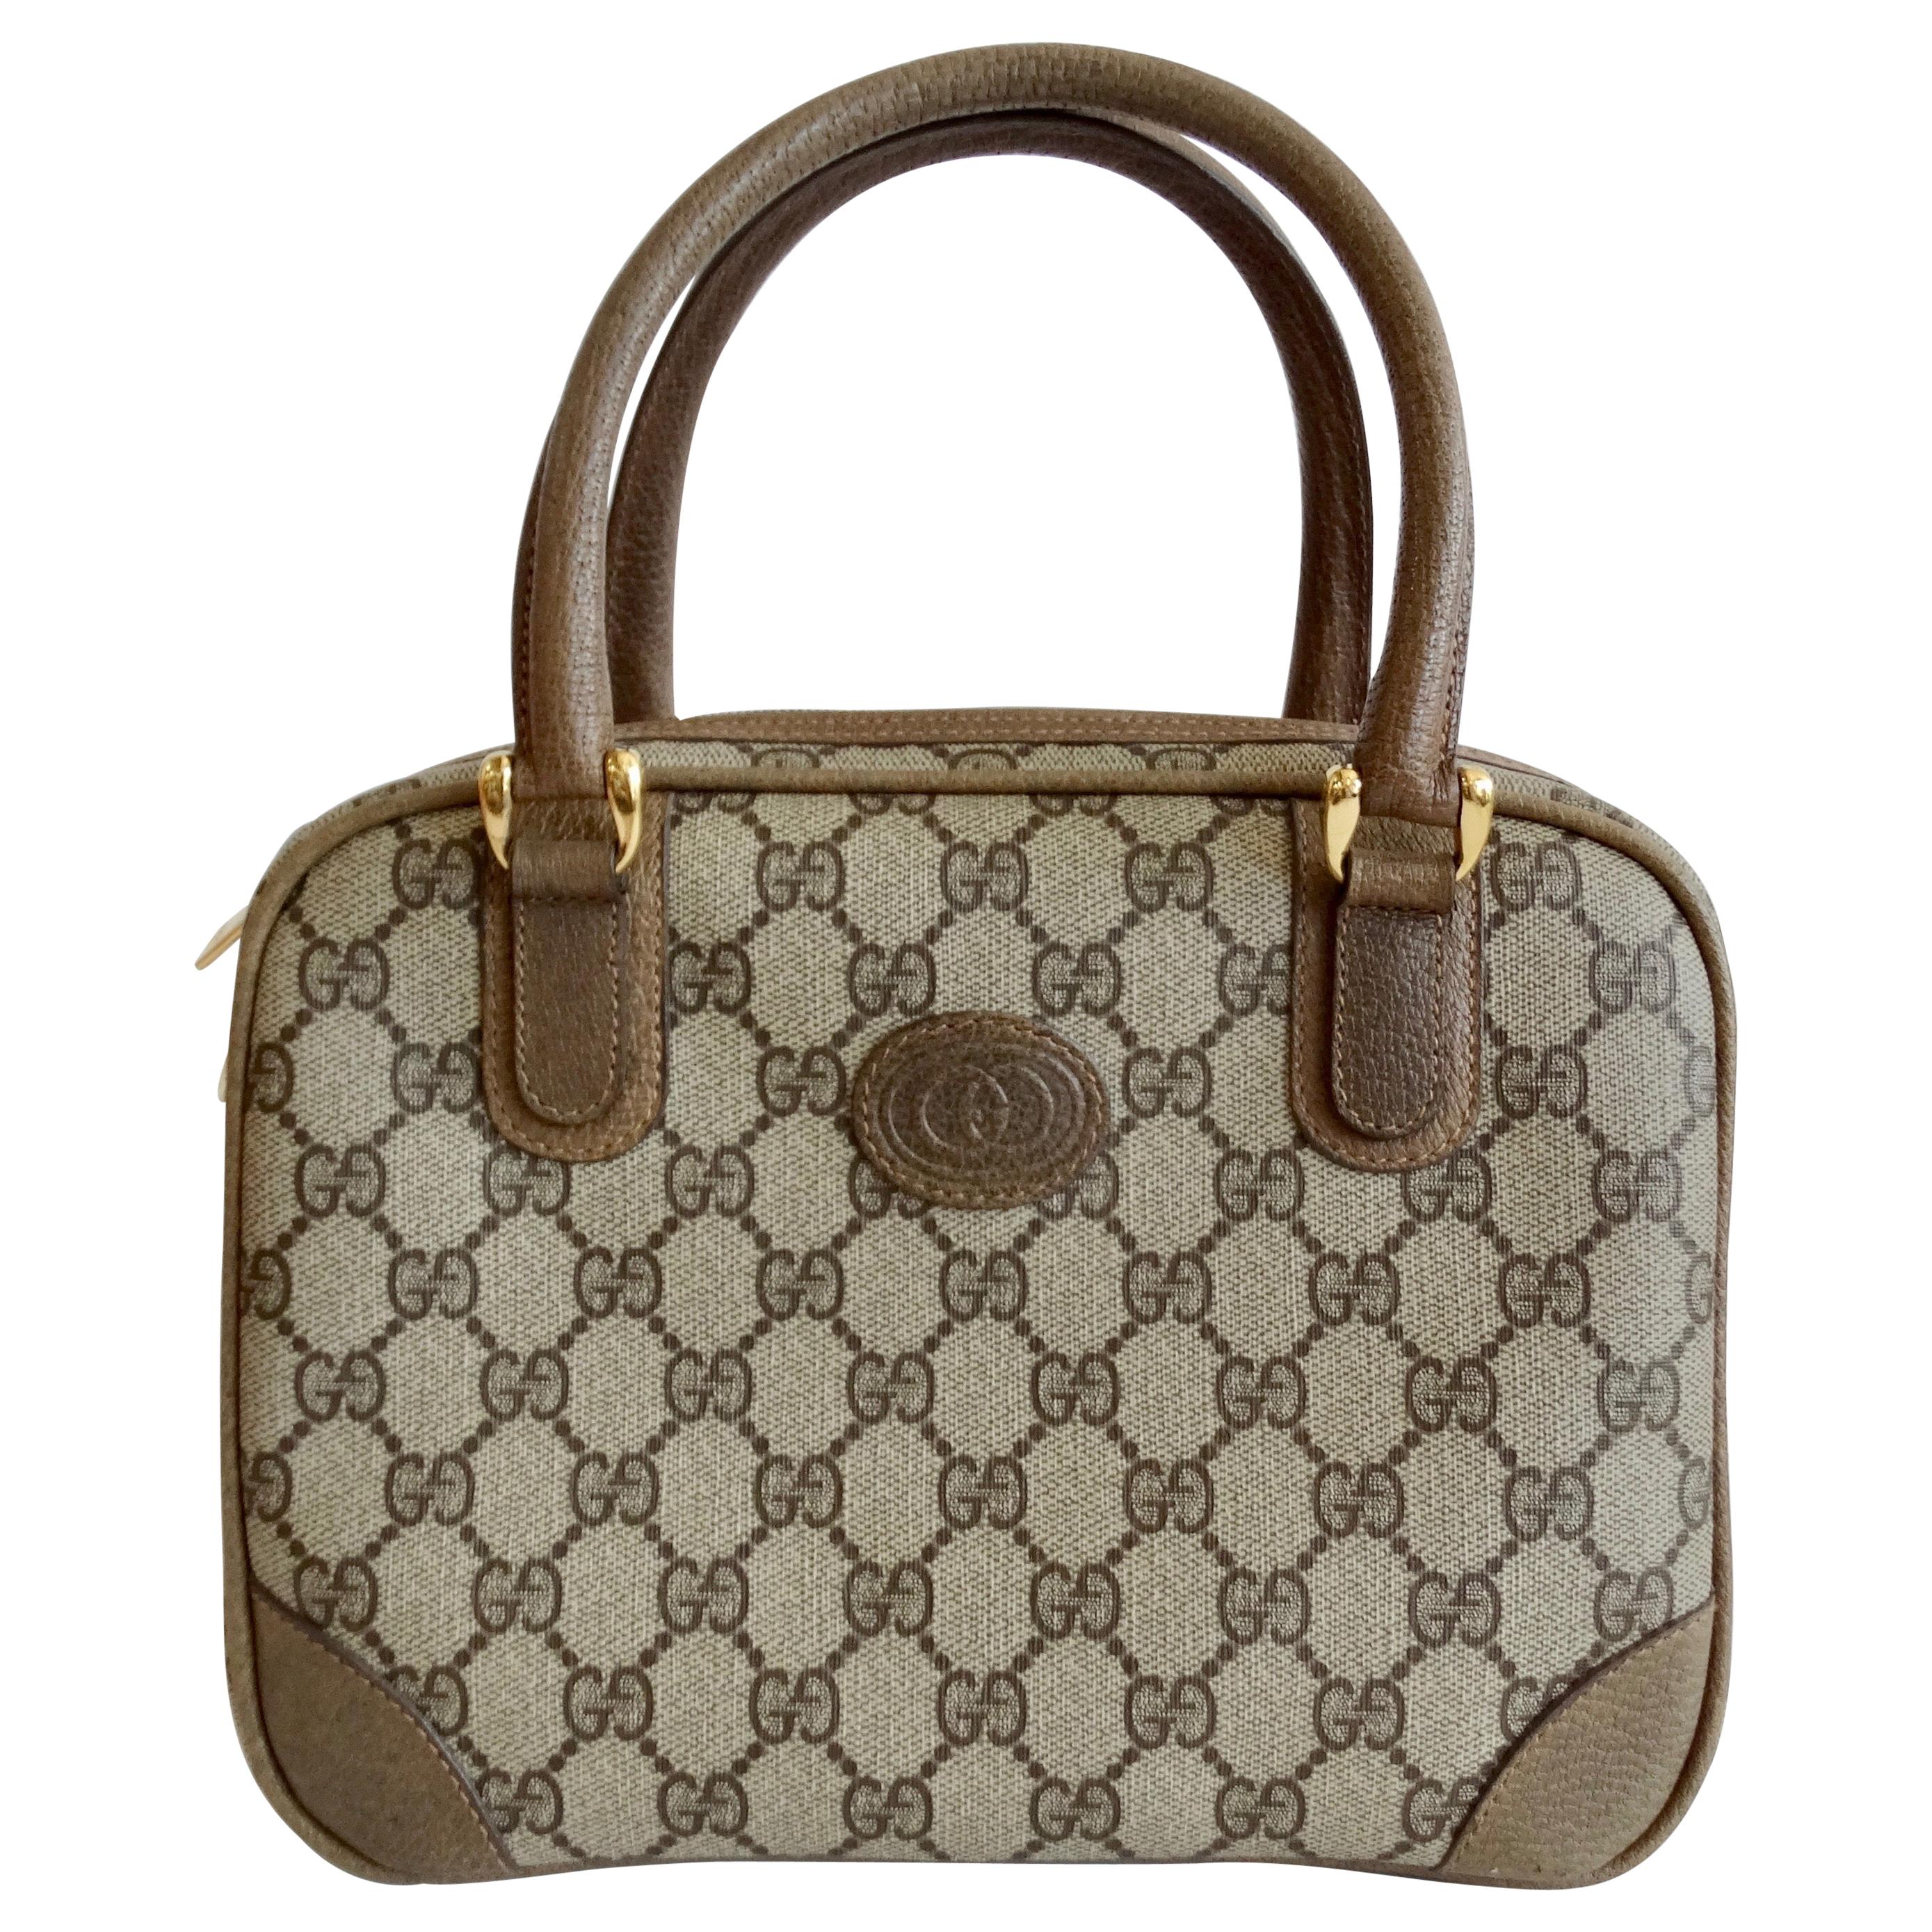 Gucci 1980s Monogram Top Handle Bag